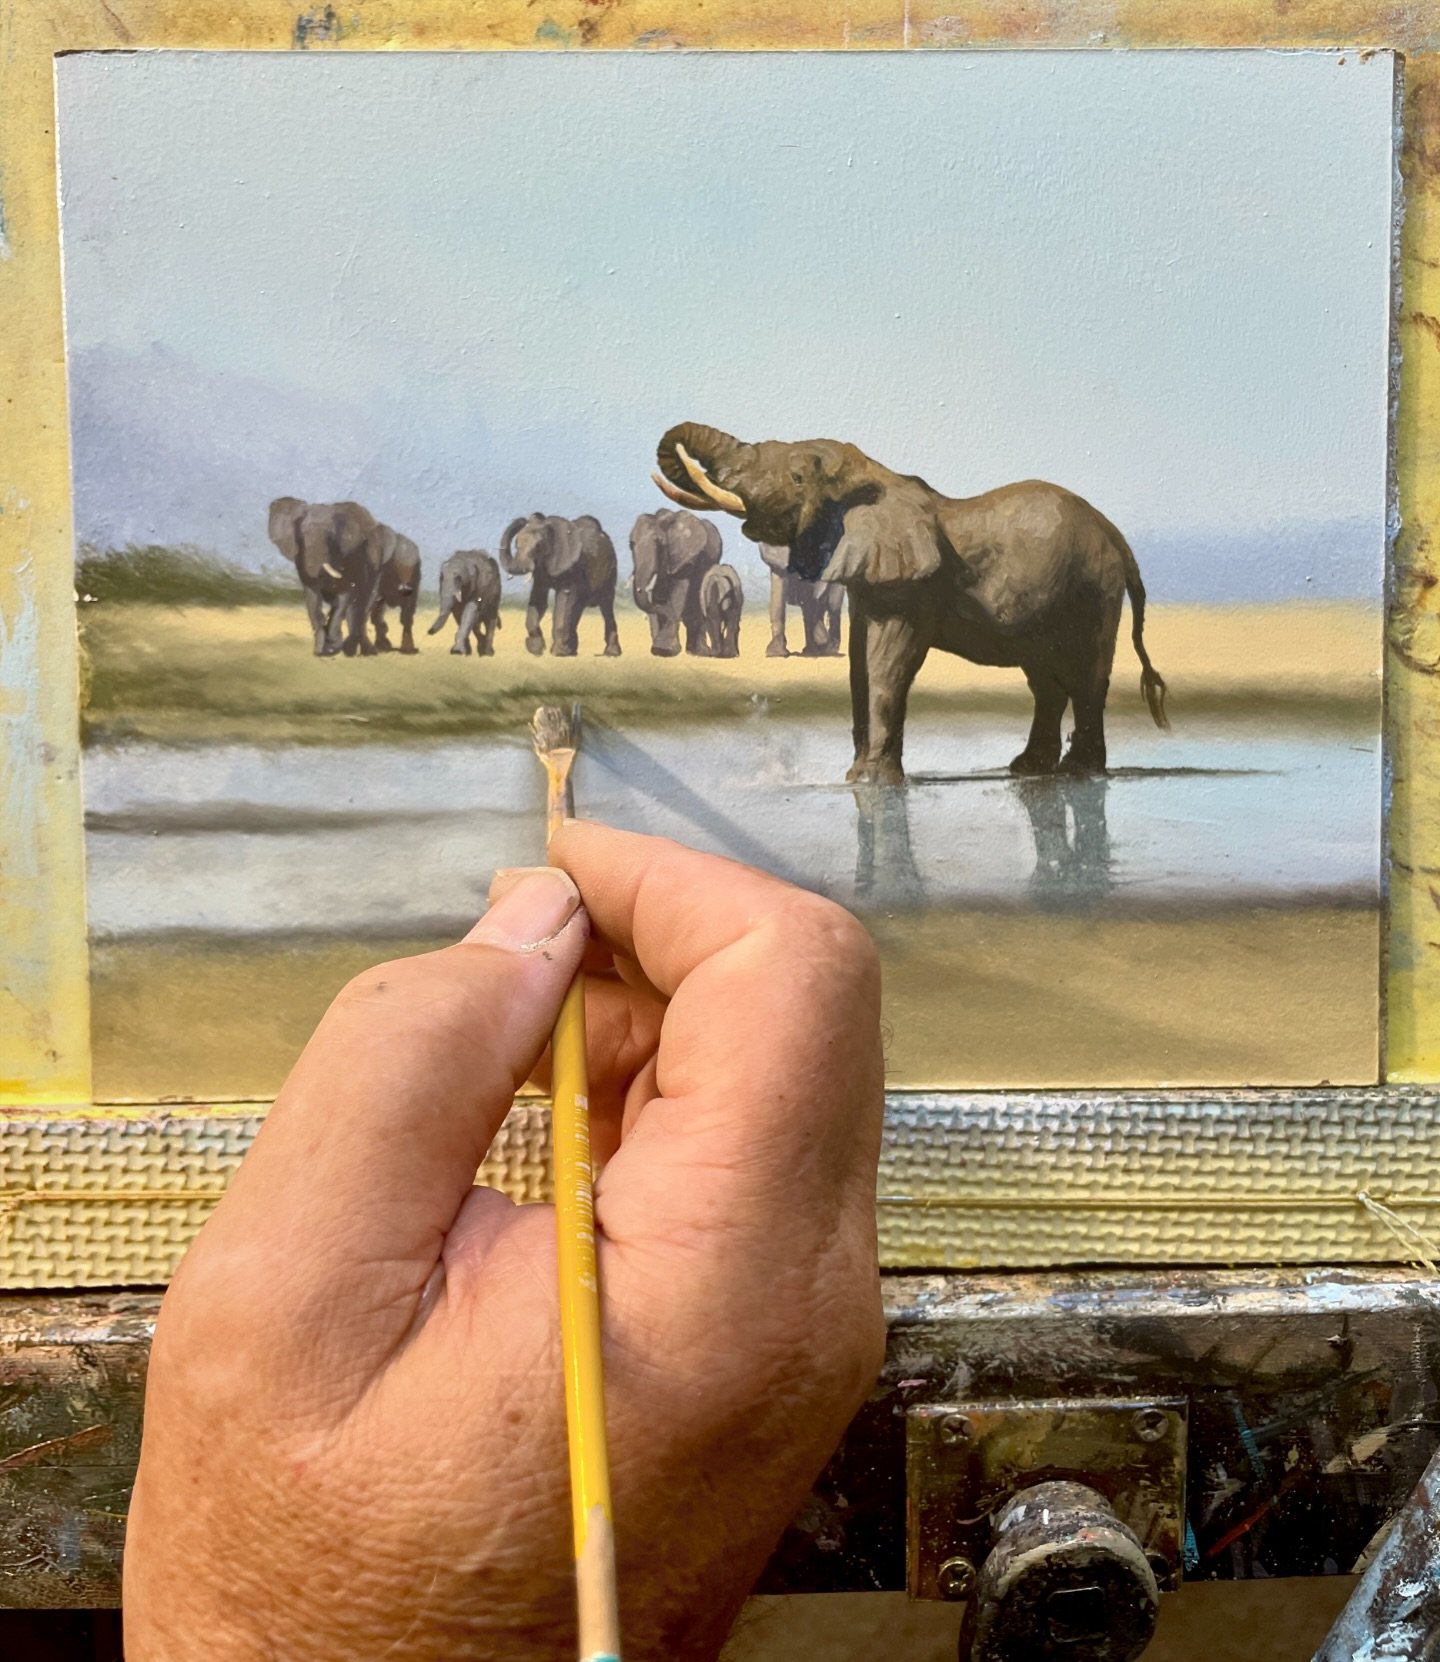 Mini herd, maxi cuteness. In progress... #oilpainting #elephants #fridayinthestudio #craigbone #craigboneartist